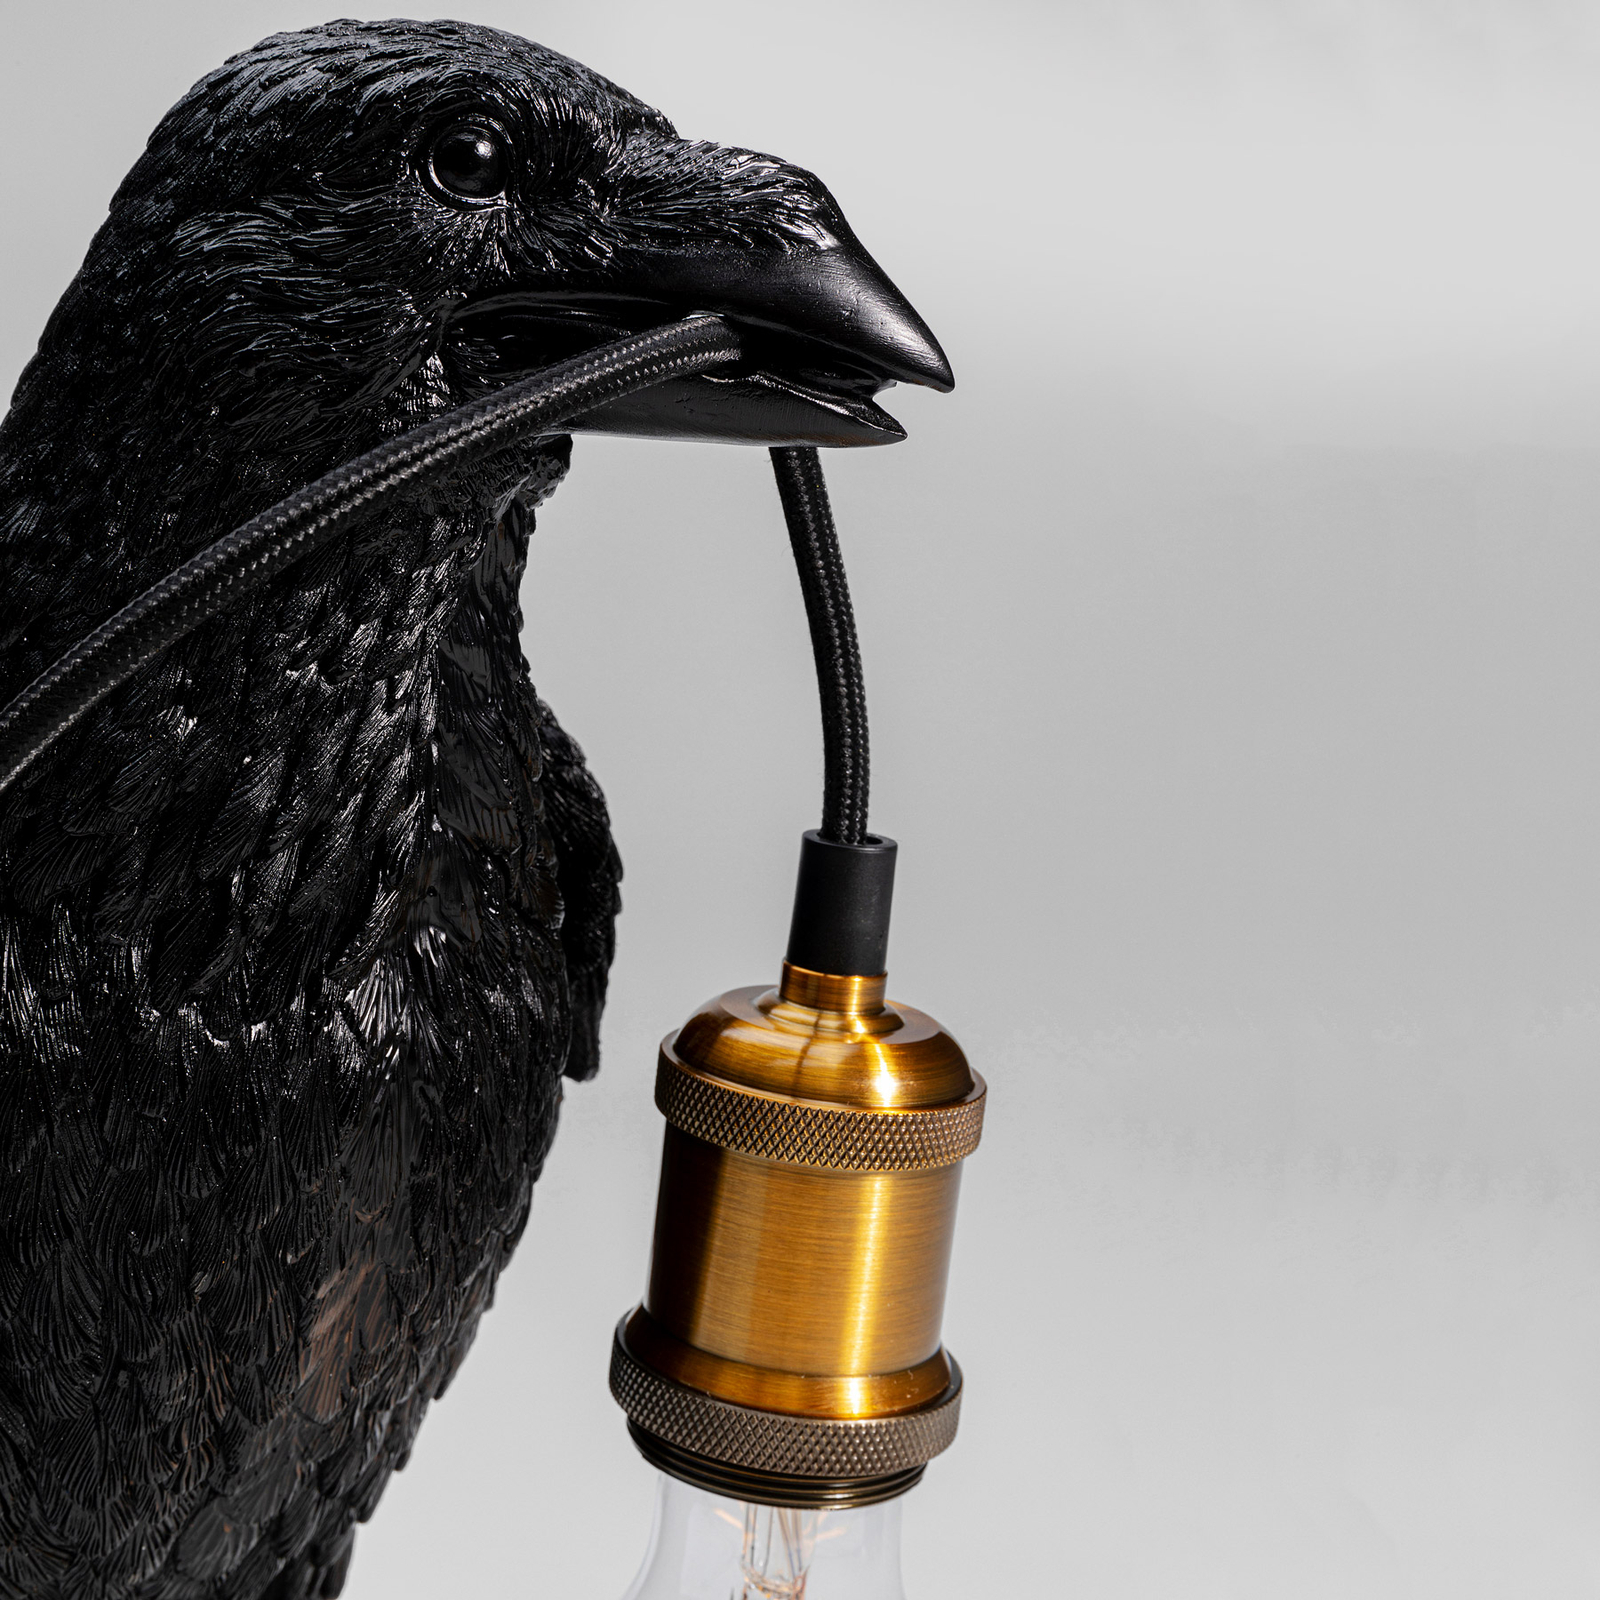 Candeeiro de mesa KAREN Animal Crow em forma de corvo